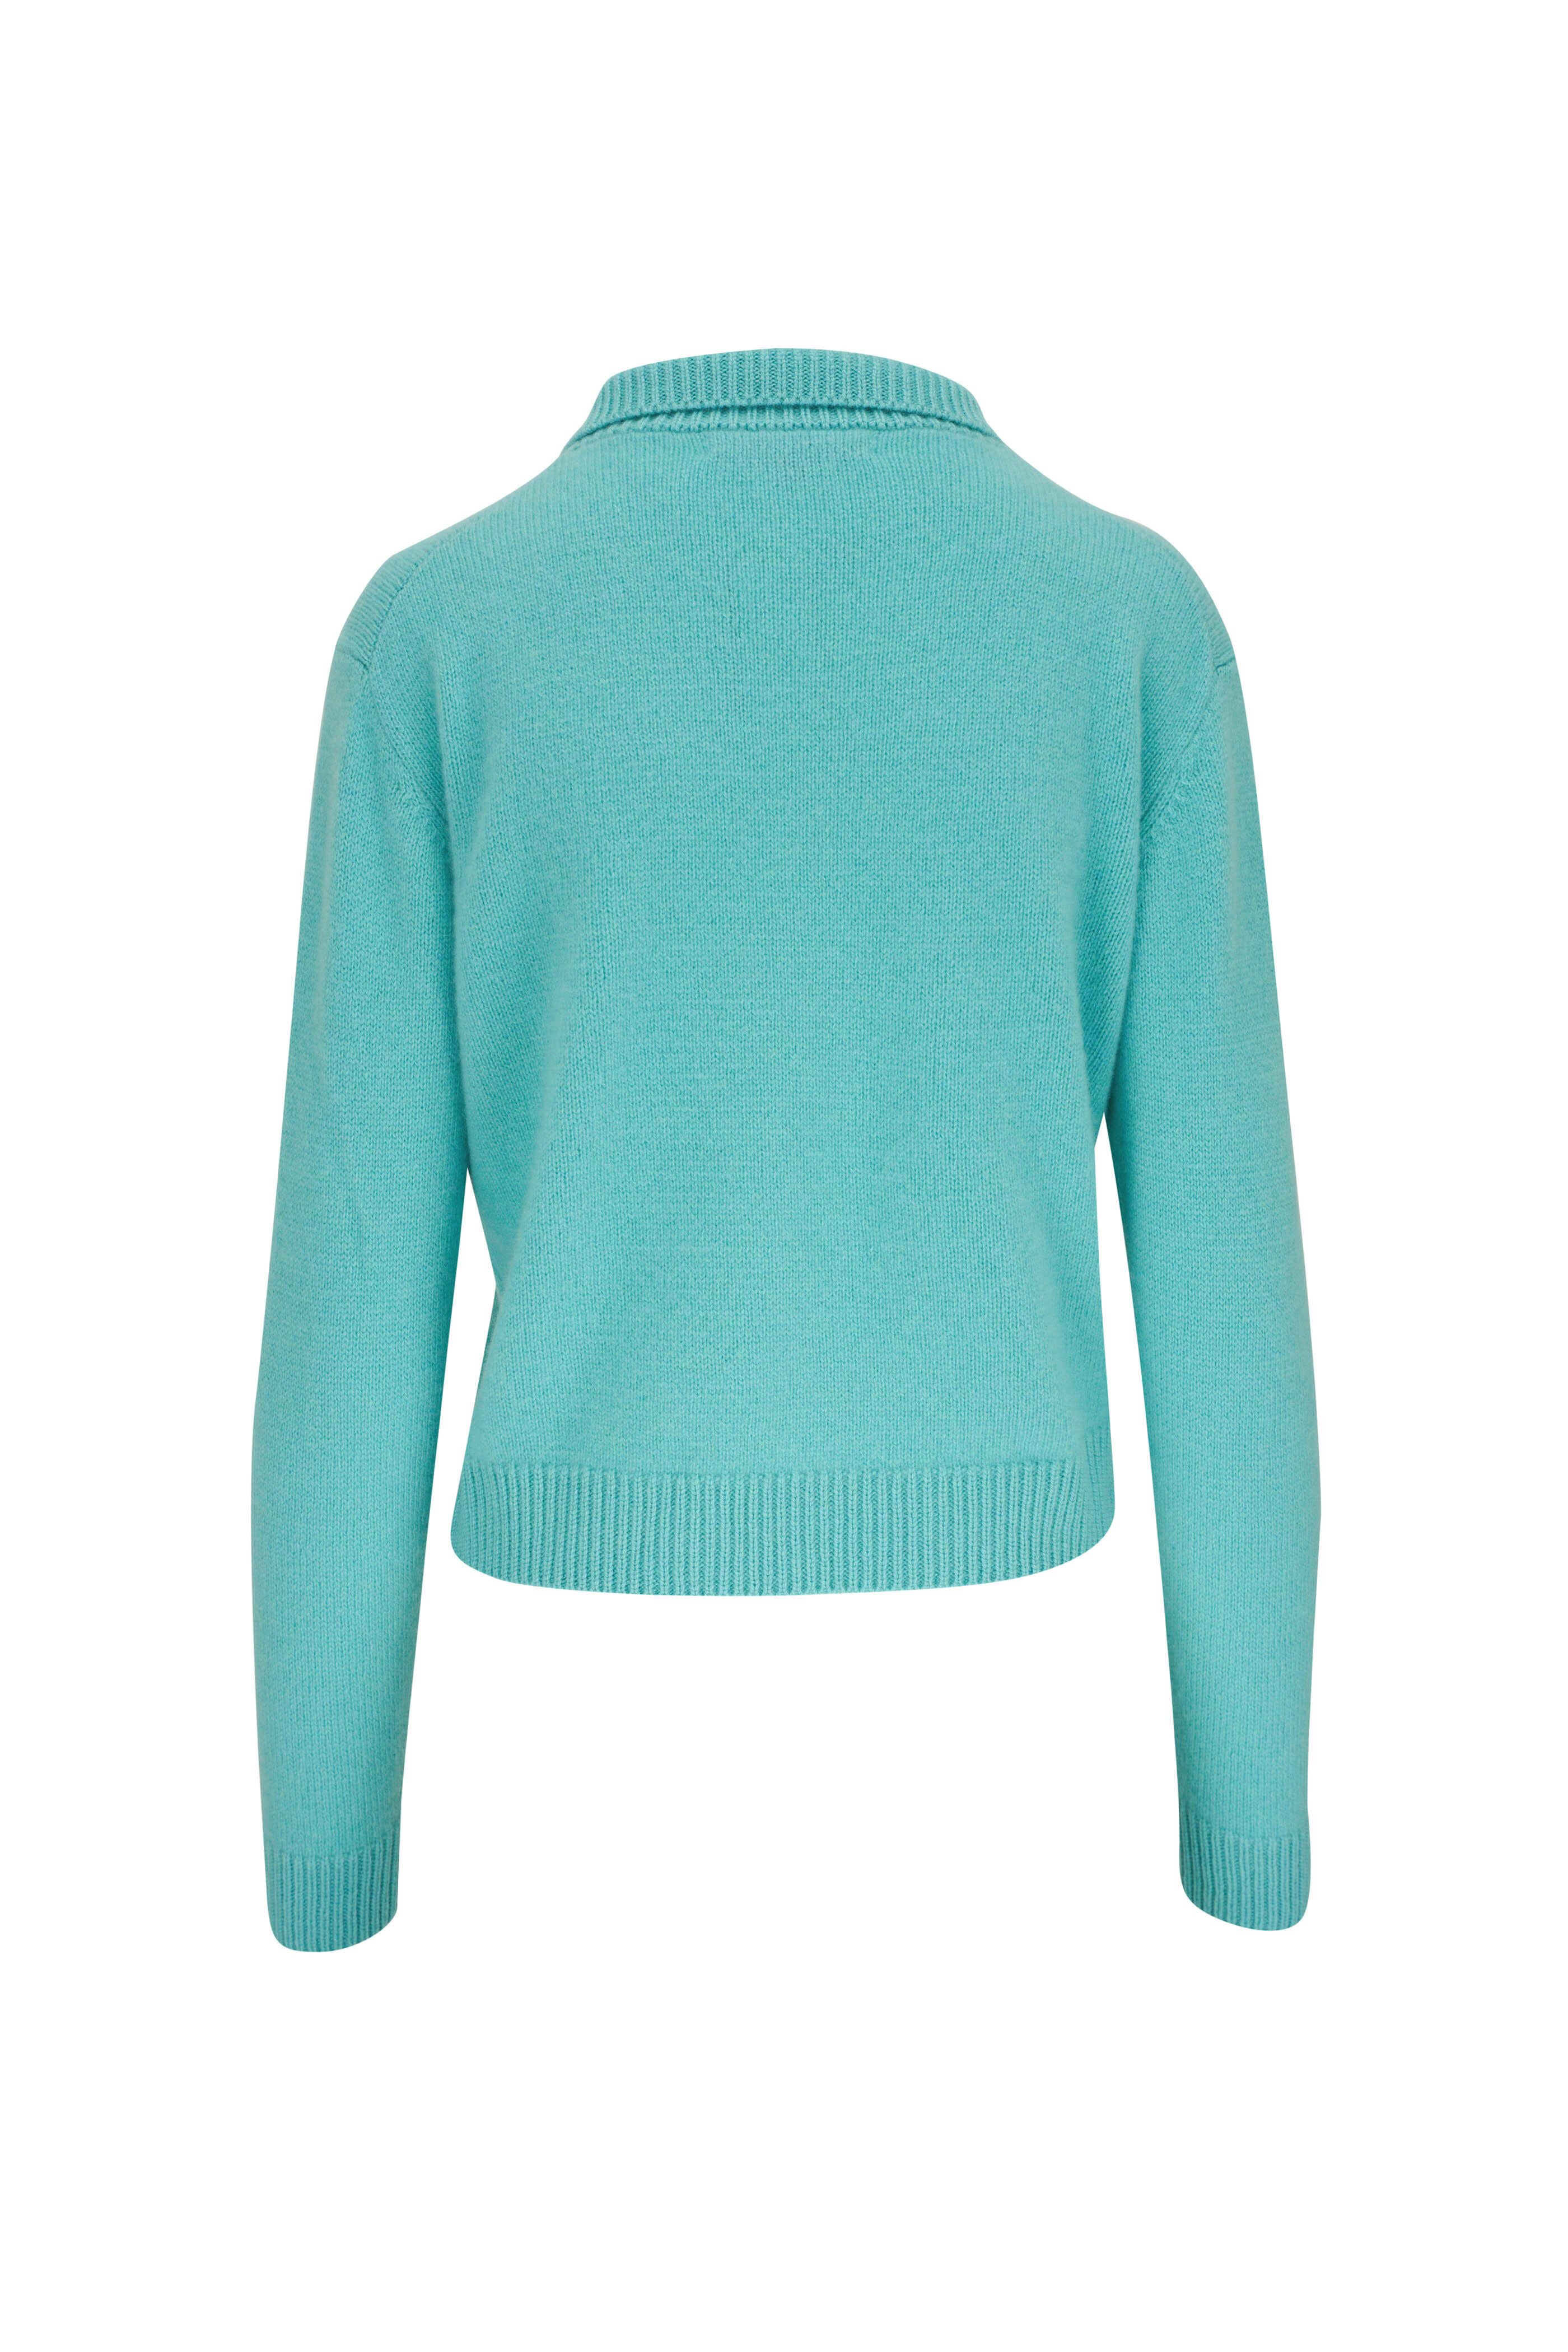 The Elder Statesman - Turquoise Half-Zip Cashmere Sweater